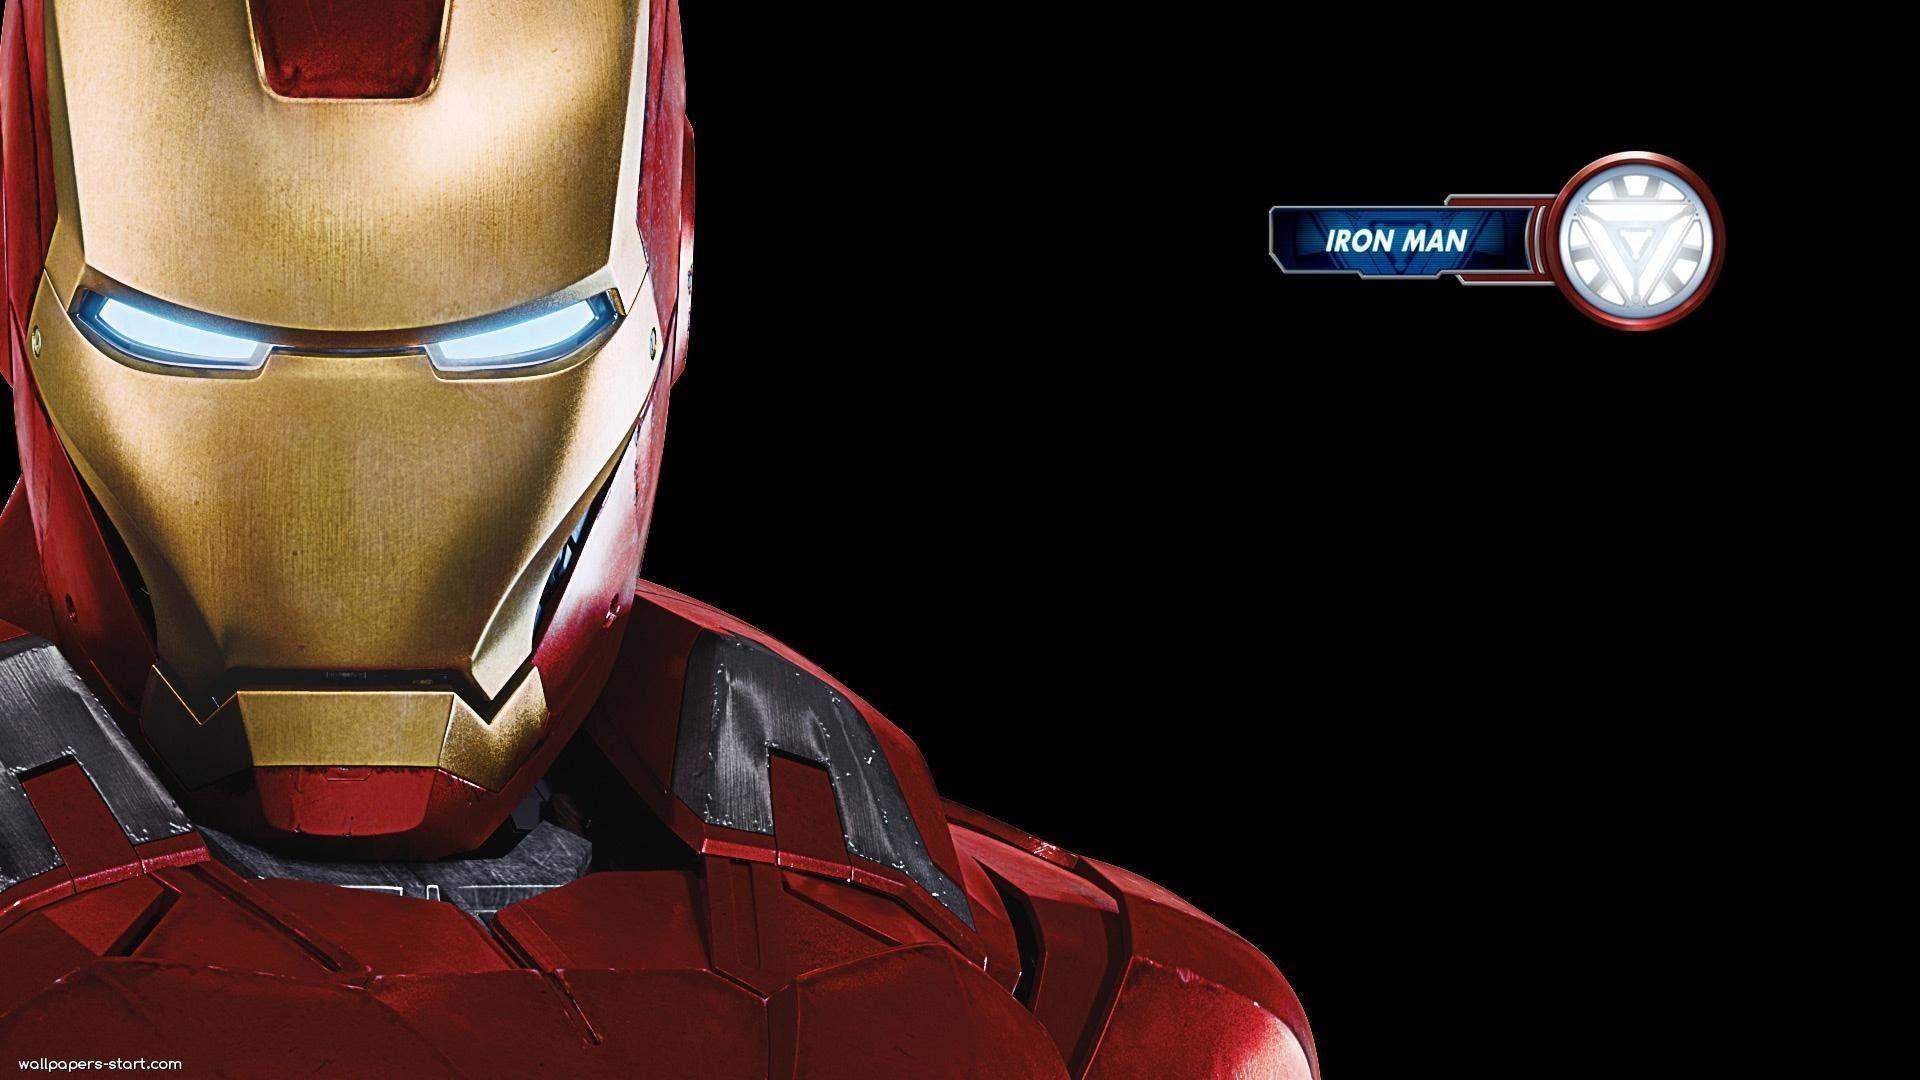 40 Gambar Hd Wallpapers for Pc Iron Man terbaru 2020